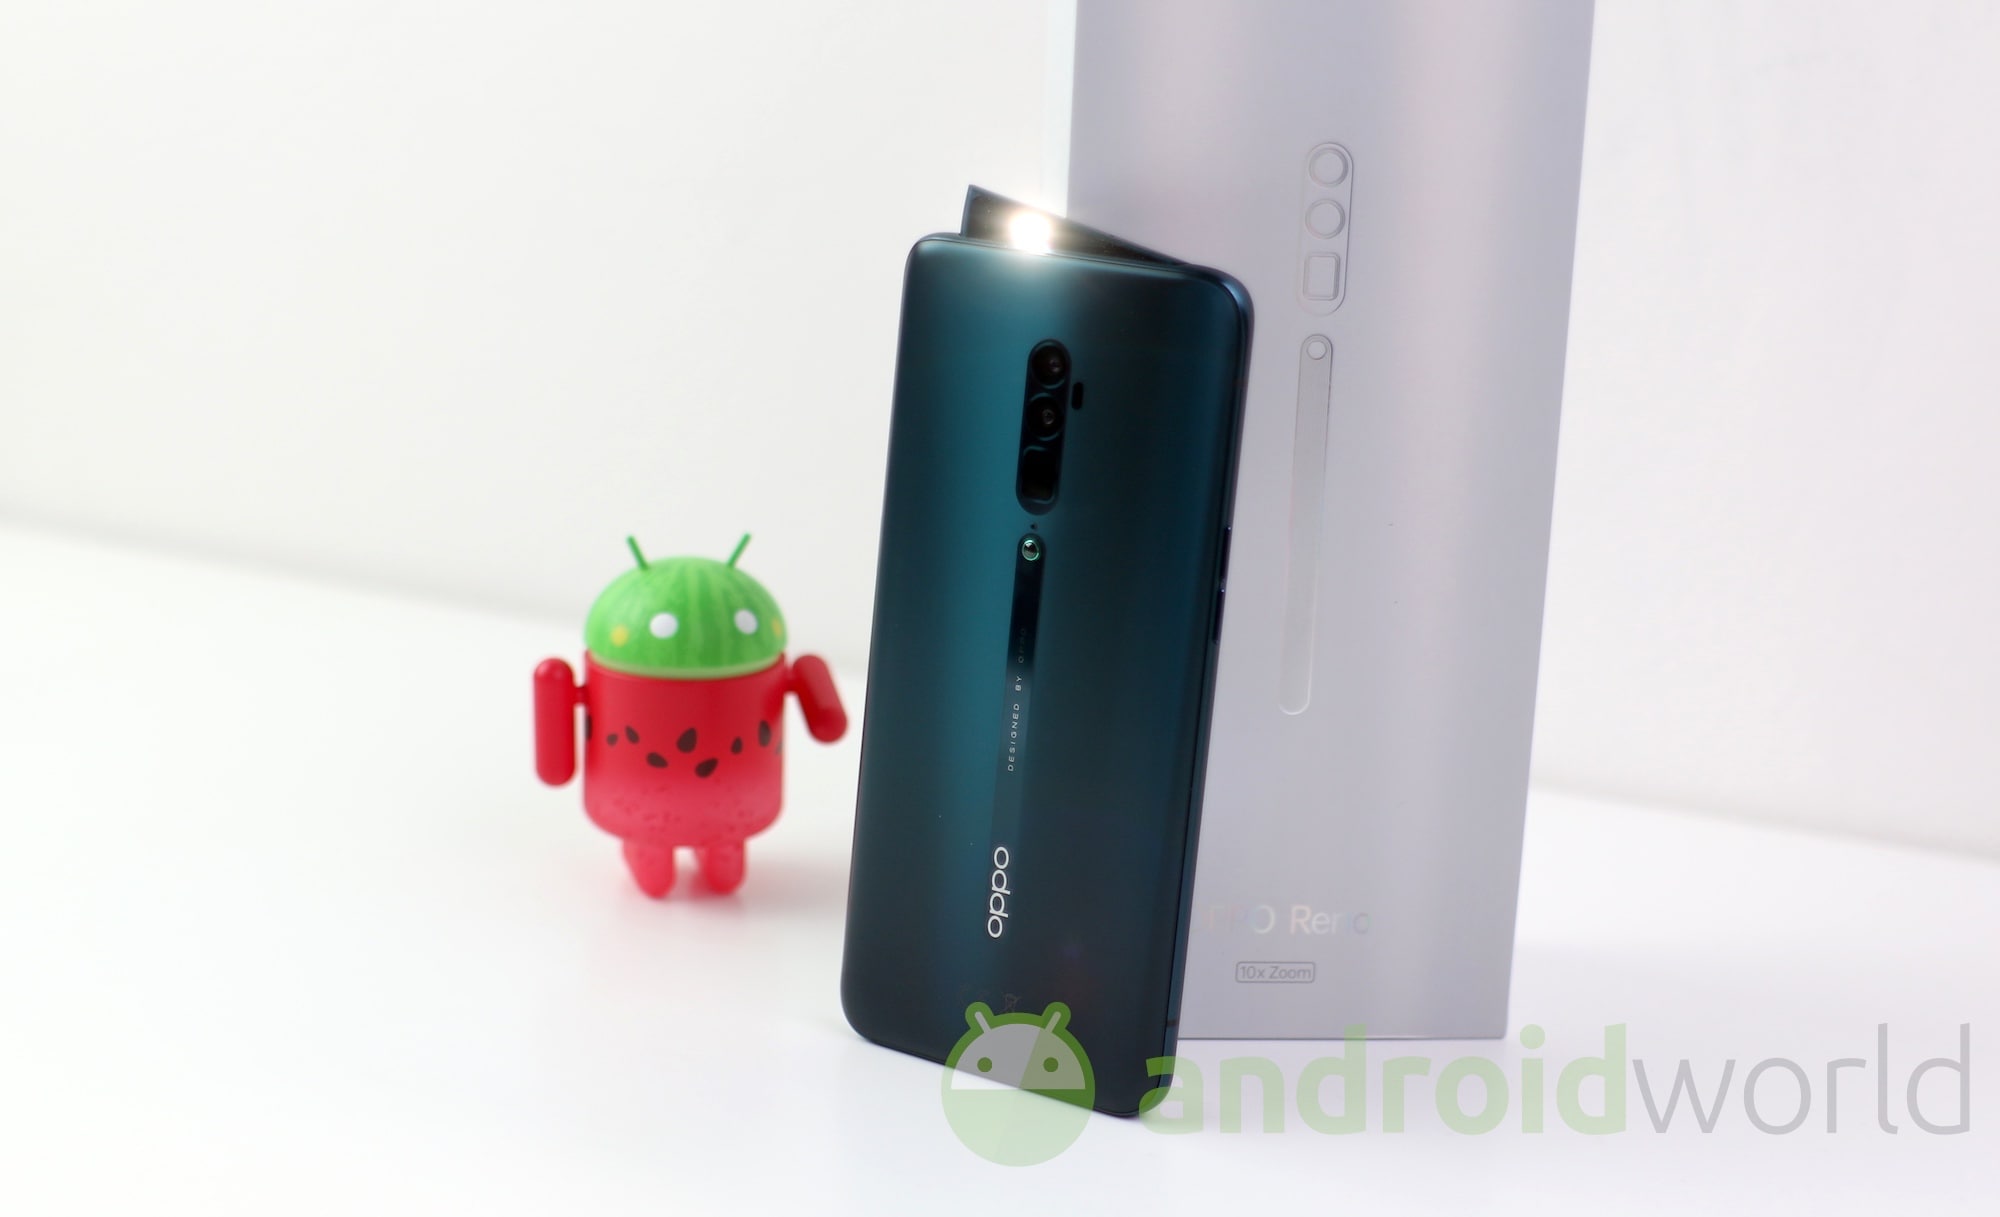 Oppo Reno riceve Android 10 in beta in Cina: quando in Italia? (foto)